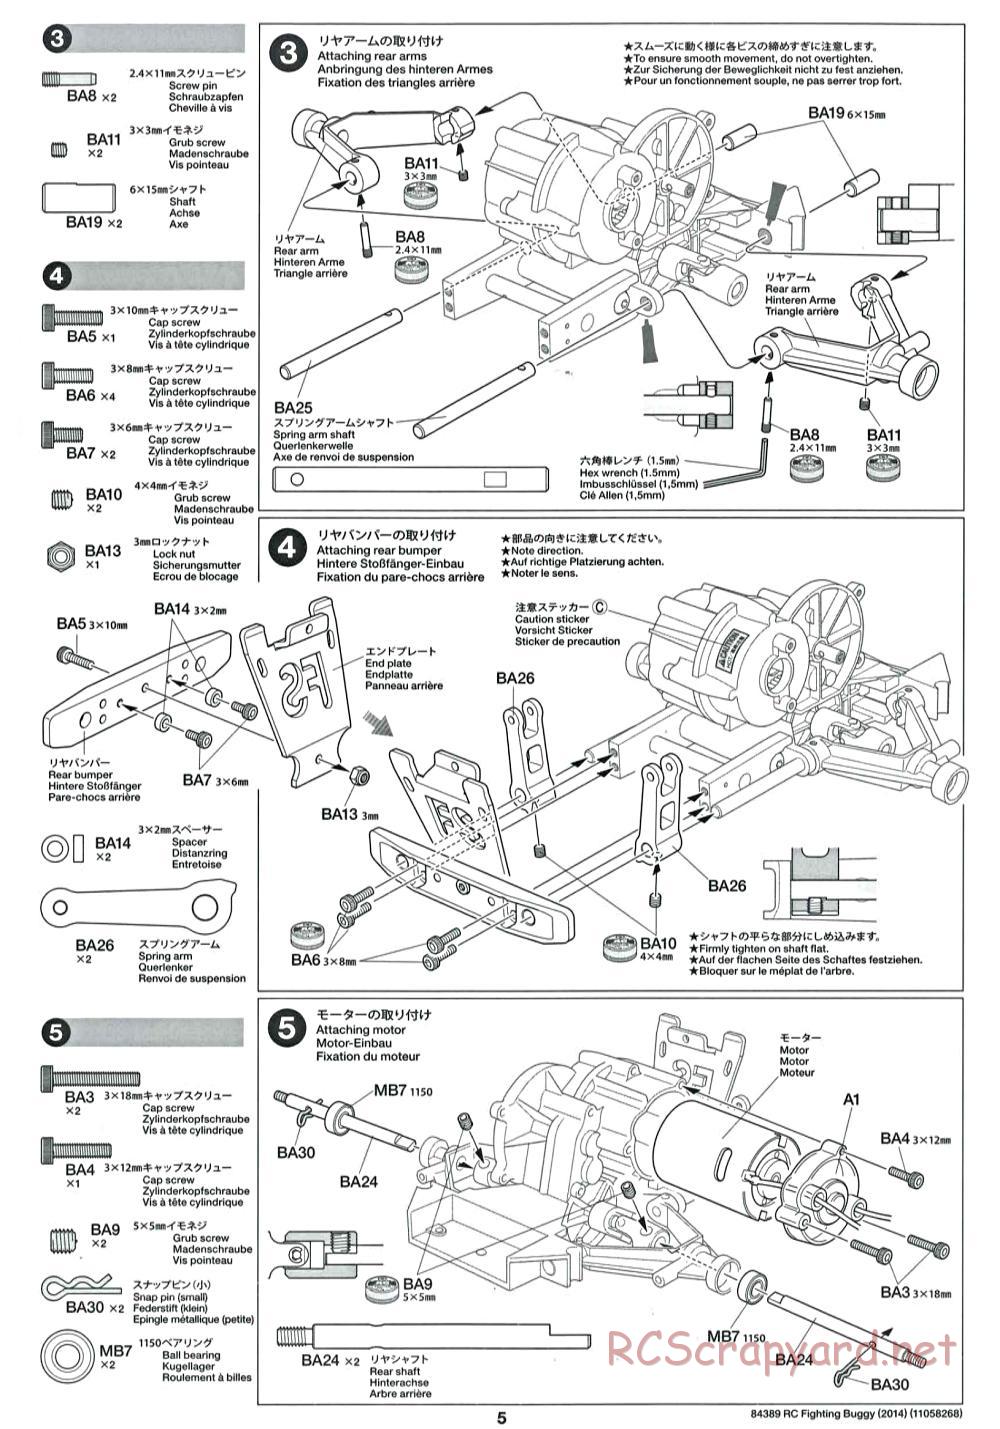 Tamiya - Fighting Buggy (2014) Chassis - Manual - Page 5